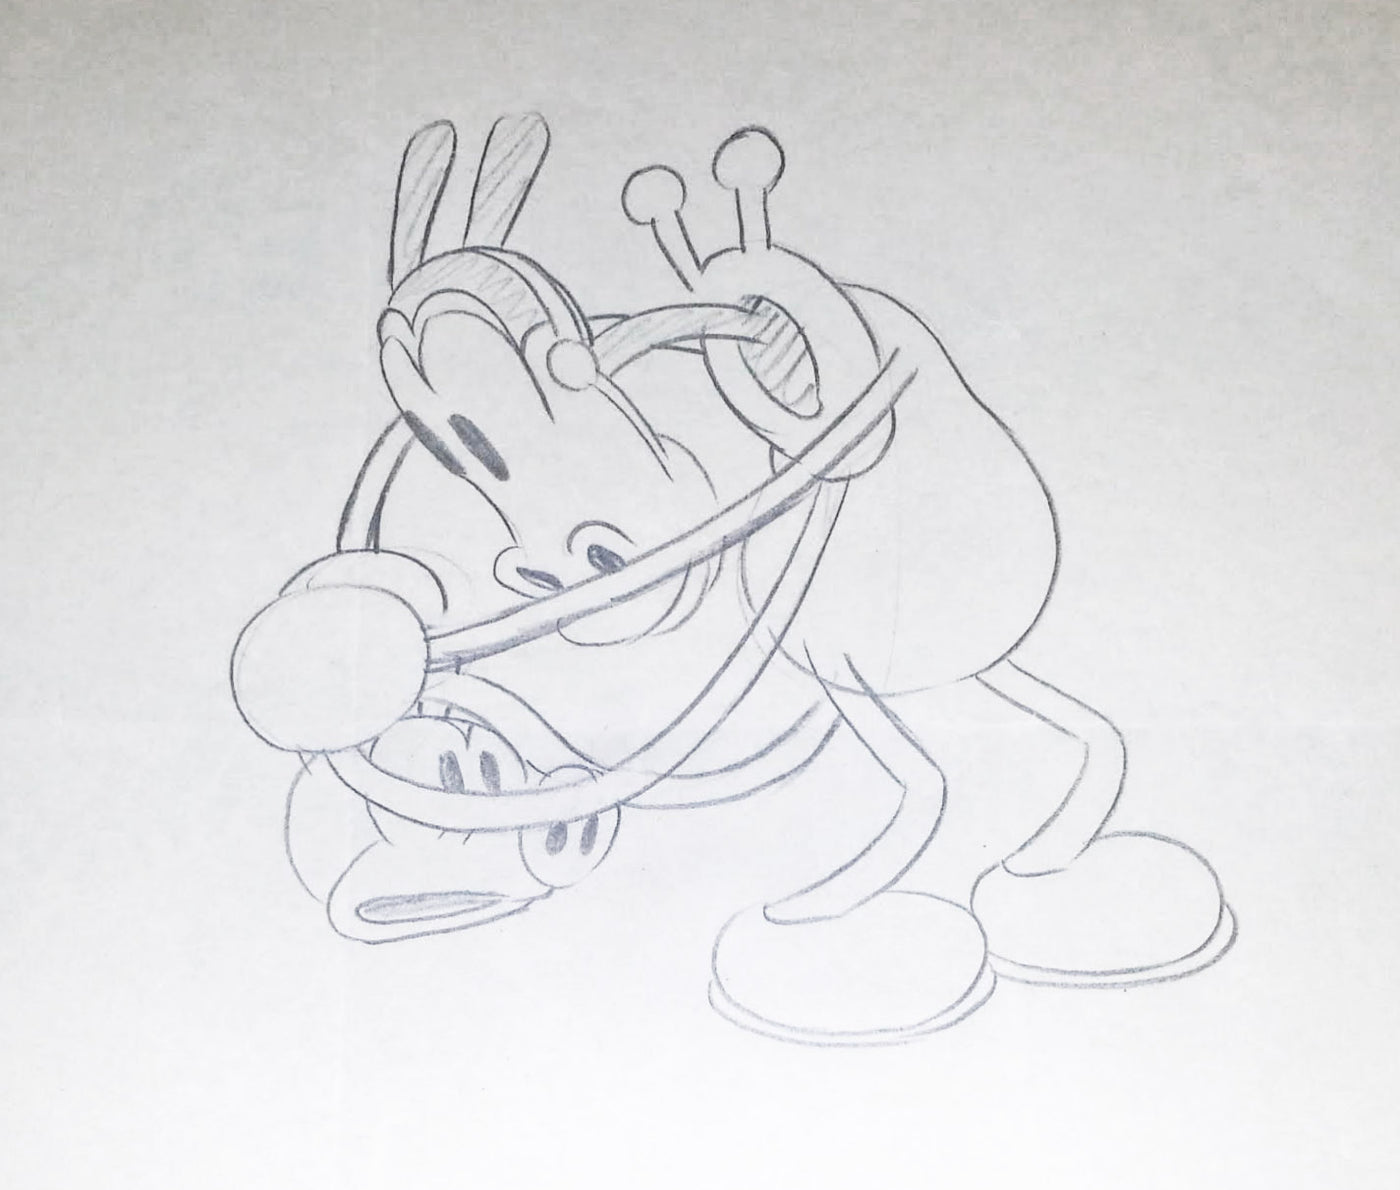 Original Walt Disney Production Drawing featuring Horace Horsecollar